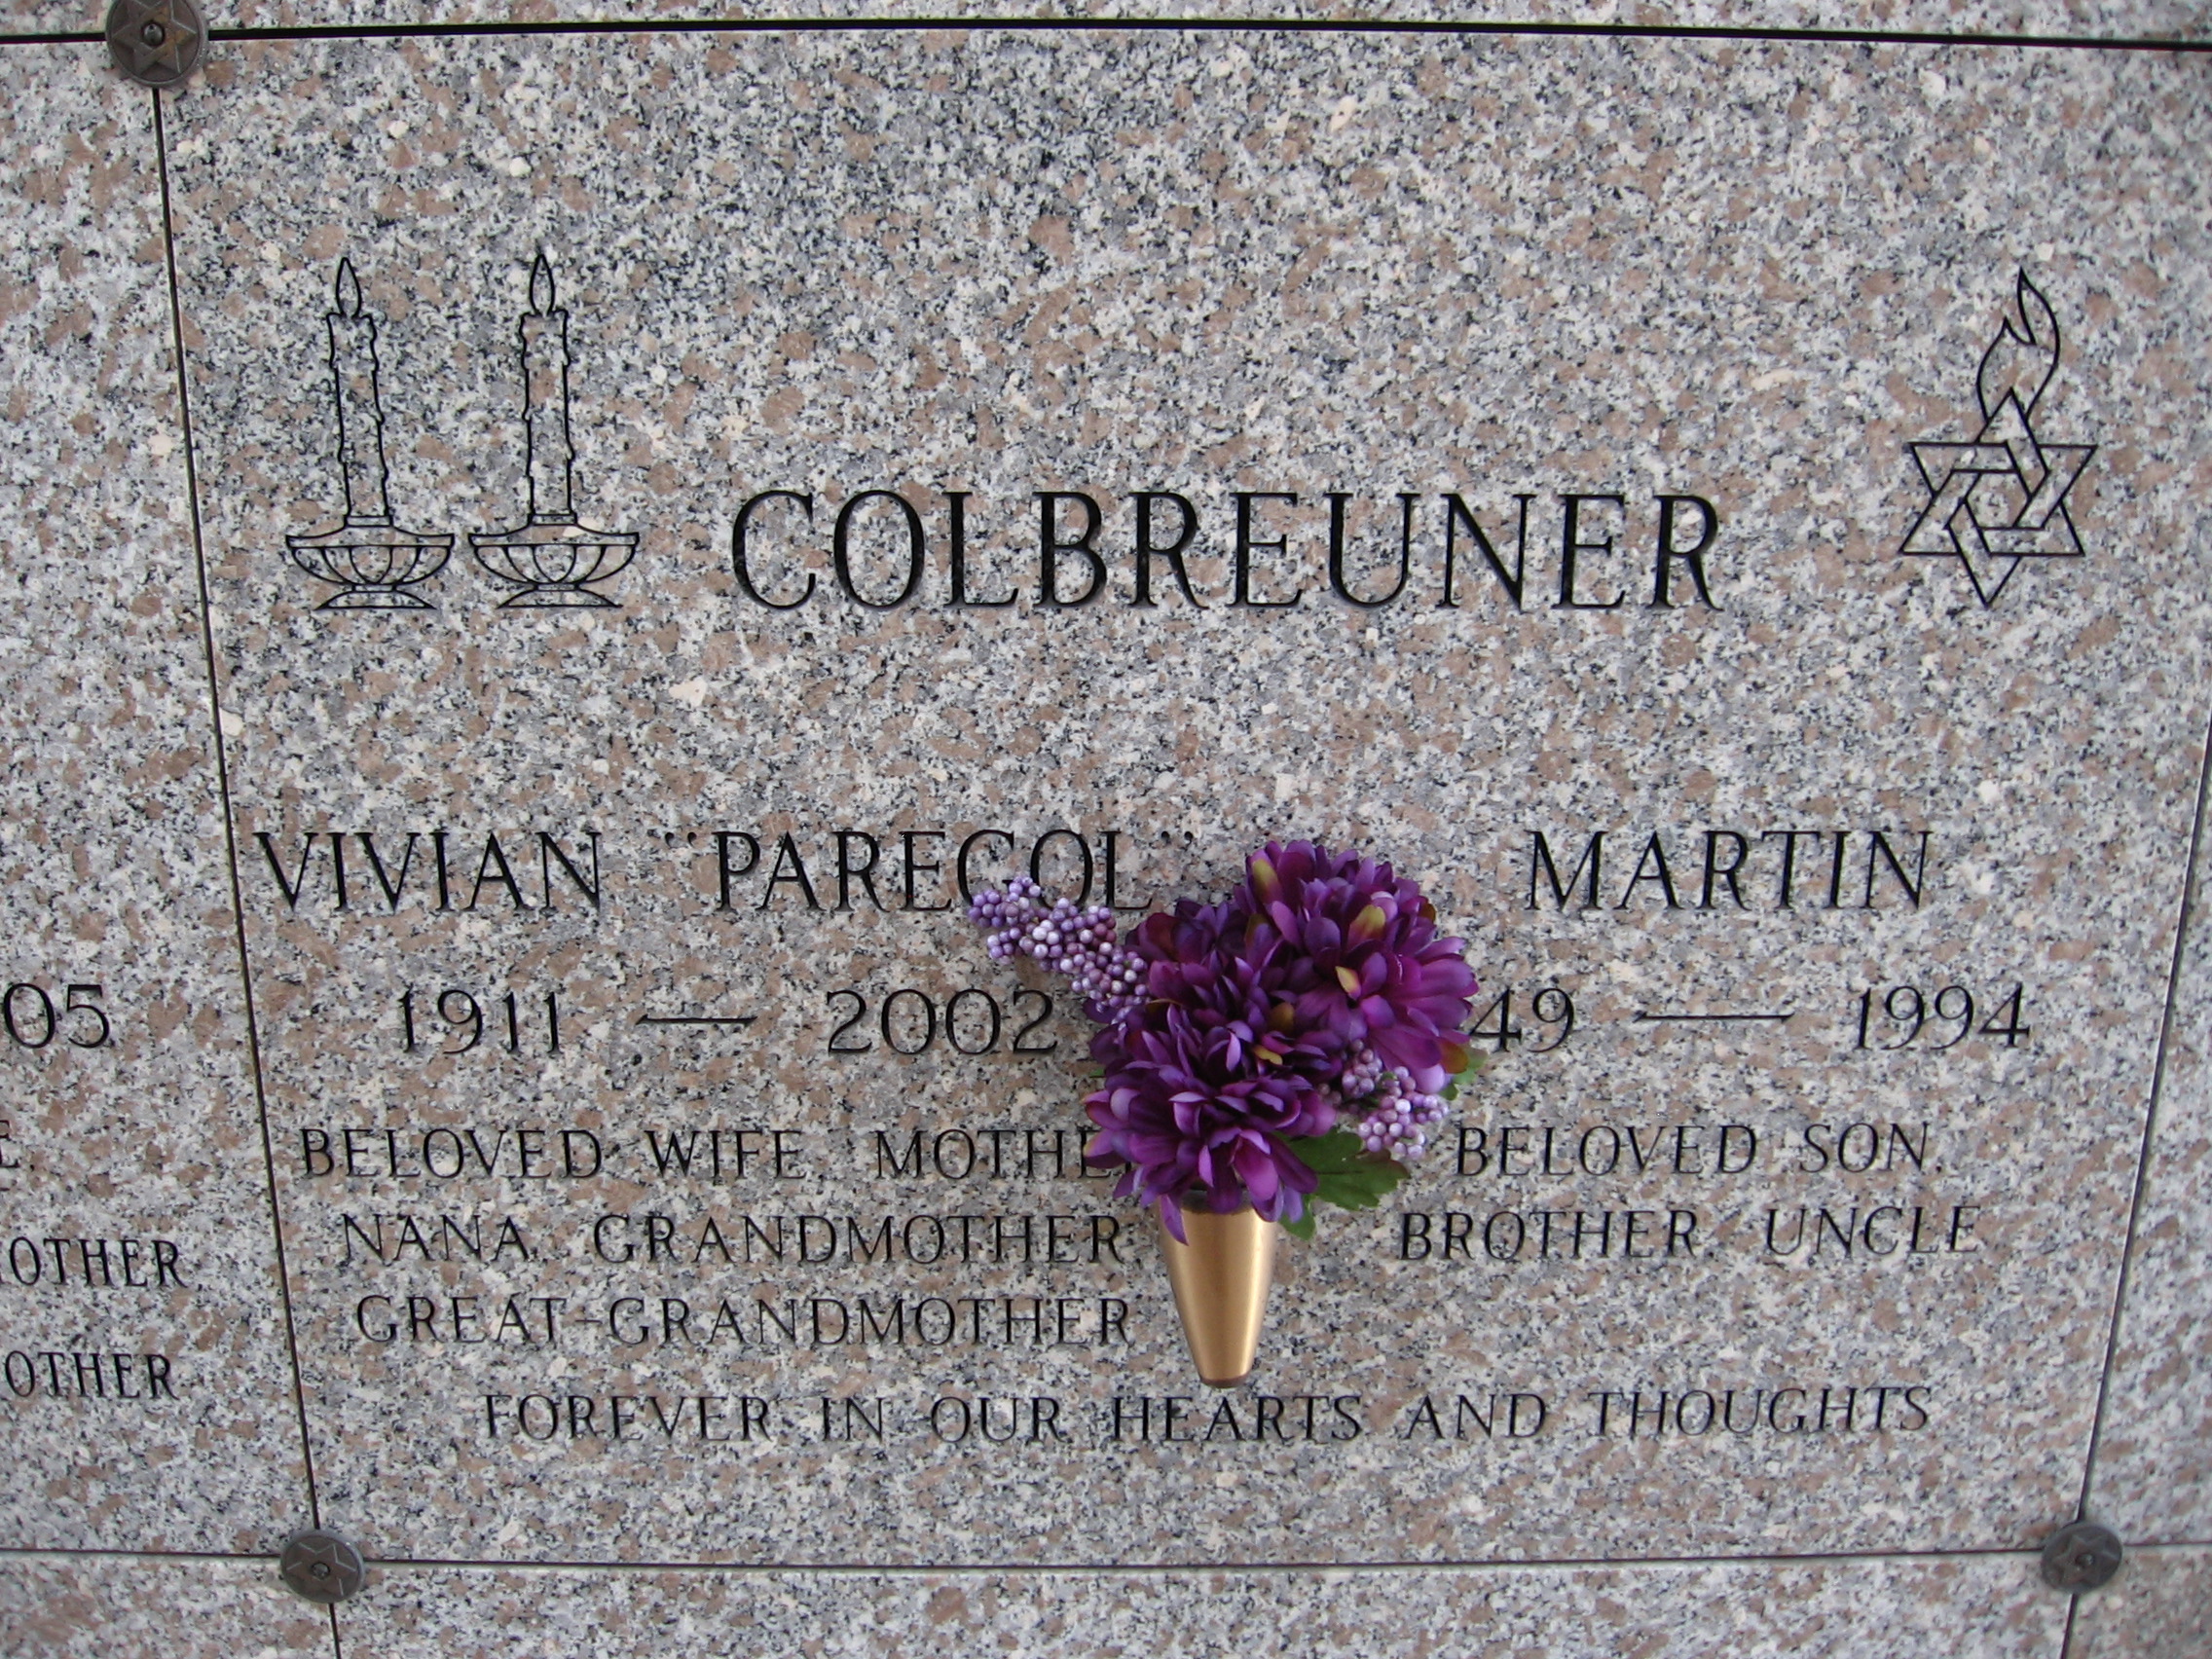 Martin Colbreuner